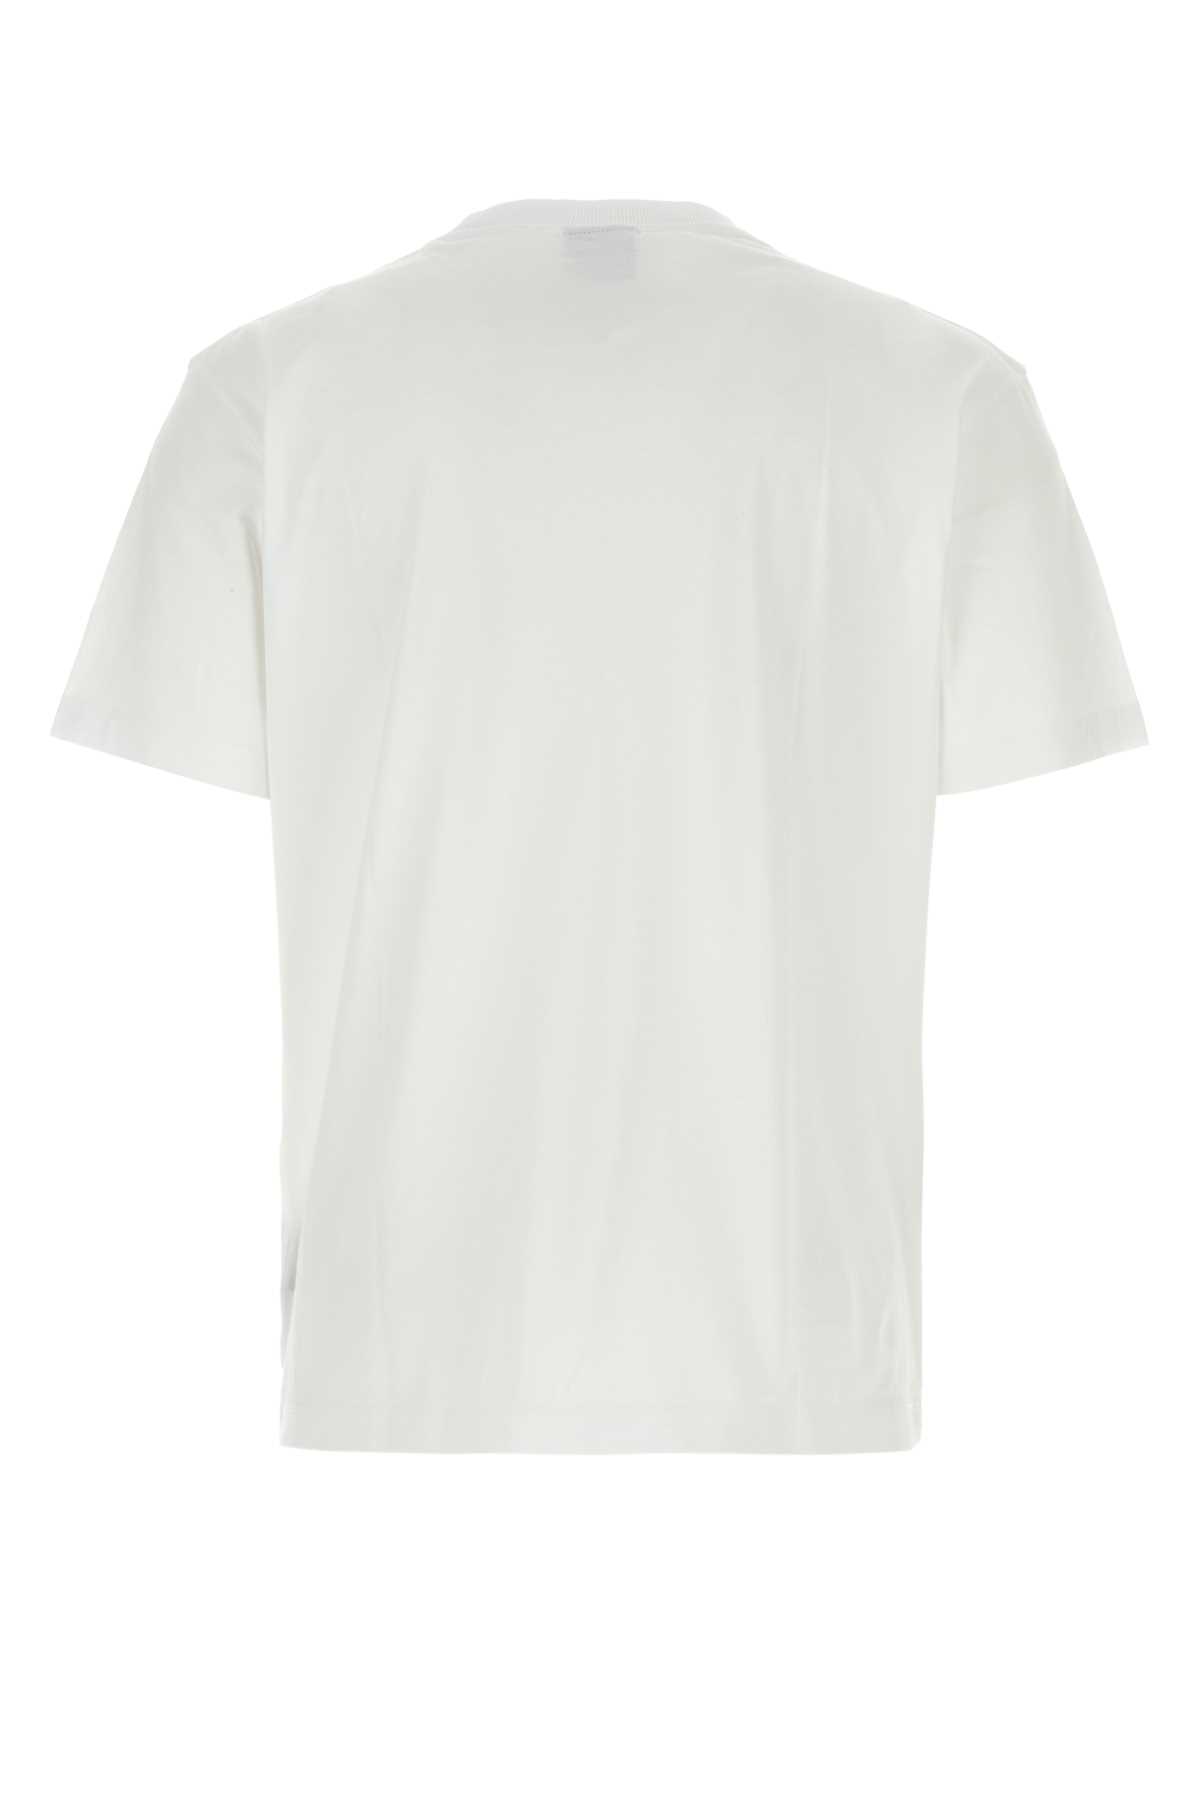 Marcelo Burlon County Of Milan White Cotton Cross T-shirt In Whiteblack